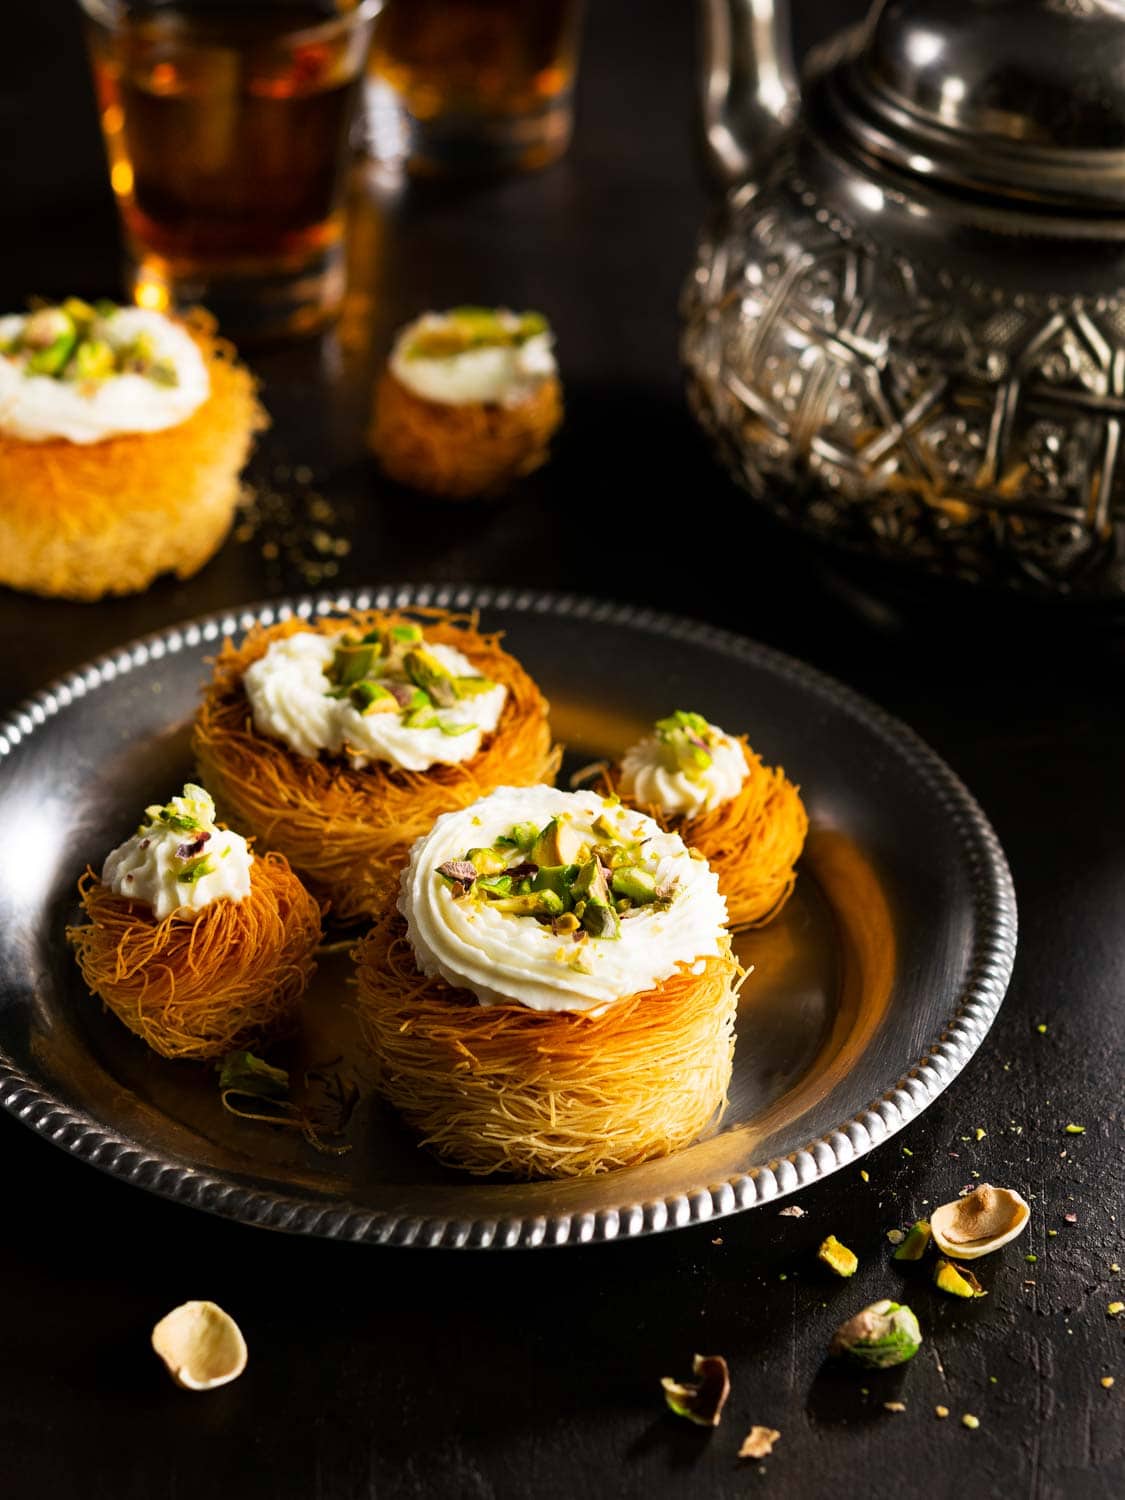 Kataifi, kadayif, kunafa, baklava pastry nests cookies with pistachios with tea. Cooking sweets turkish, or arabic traditional ramadan pastry dessert on a dark background.